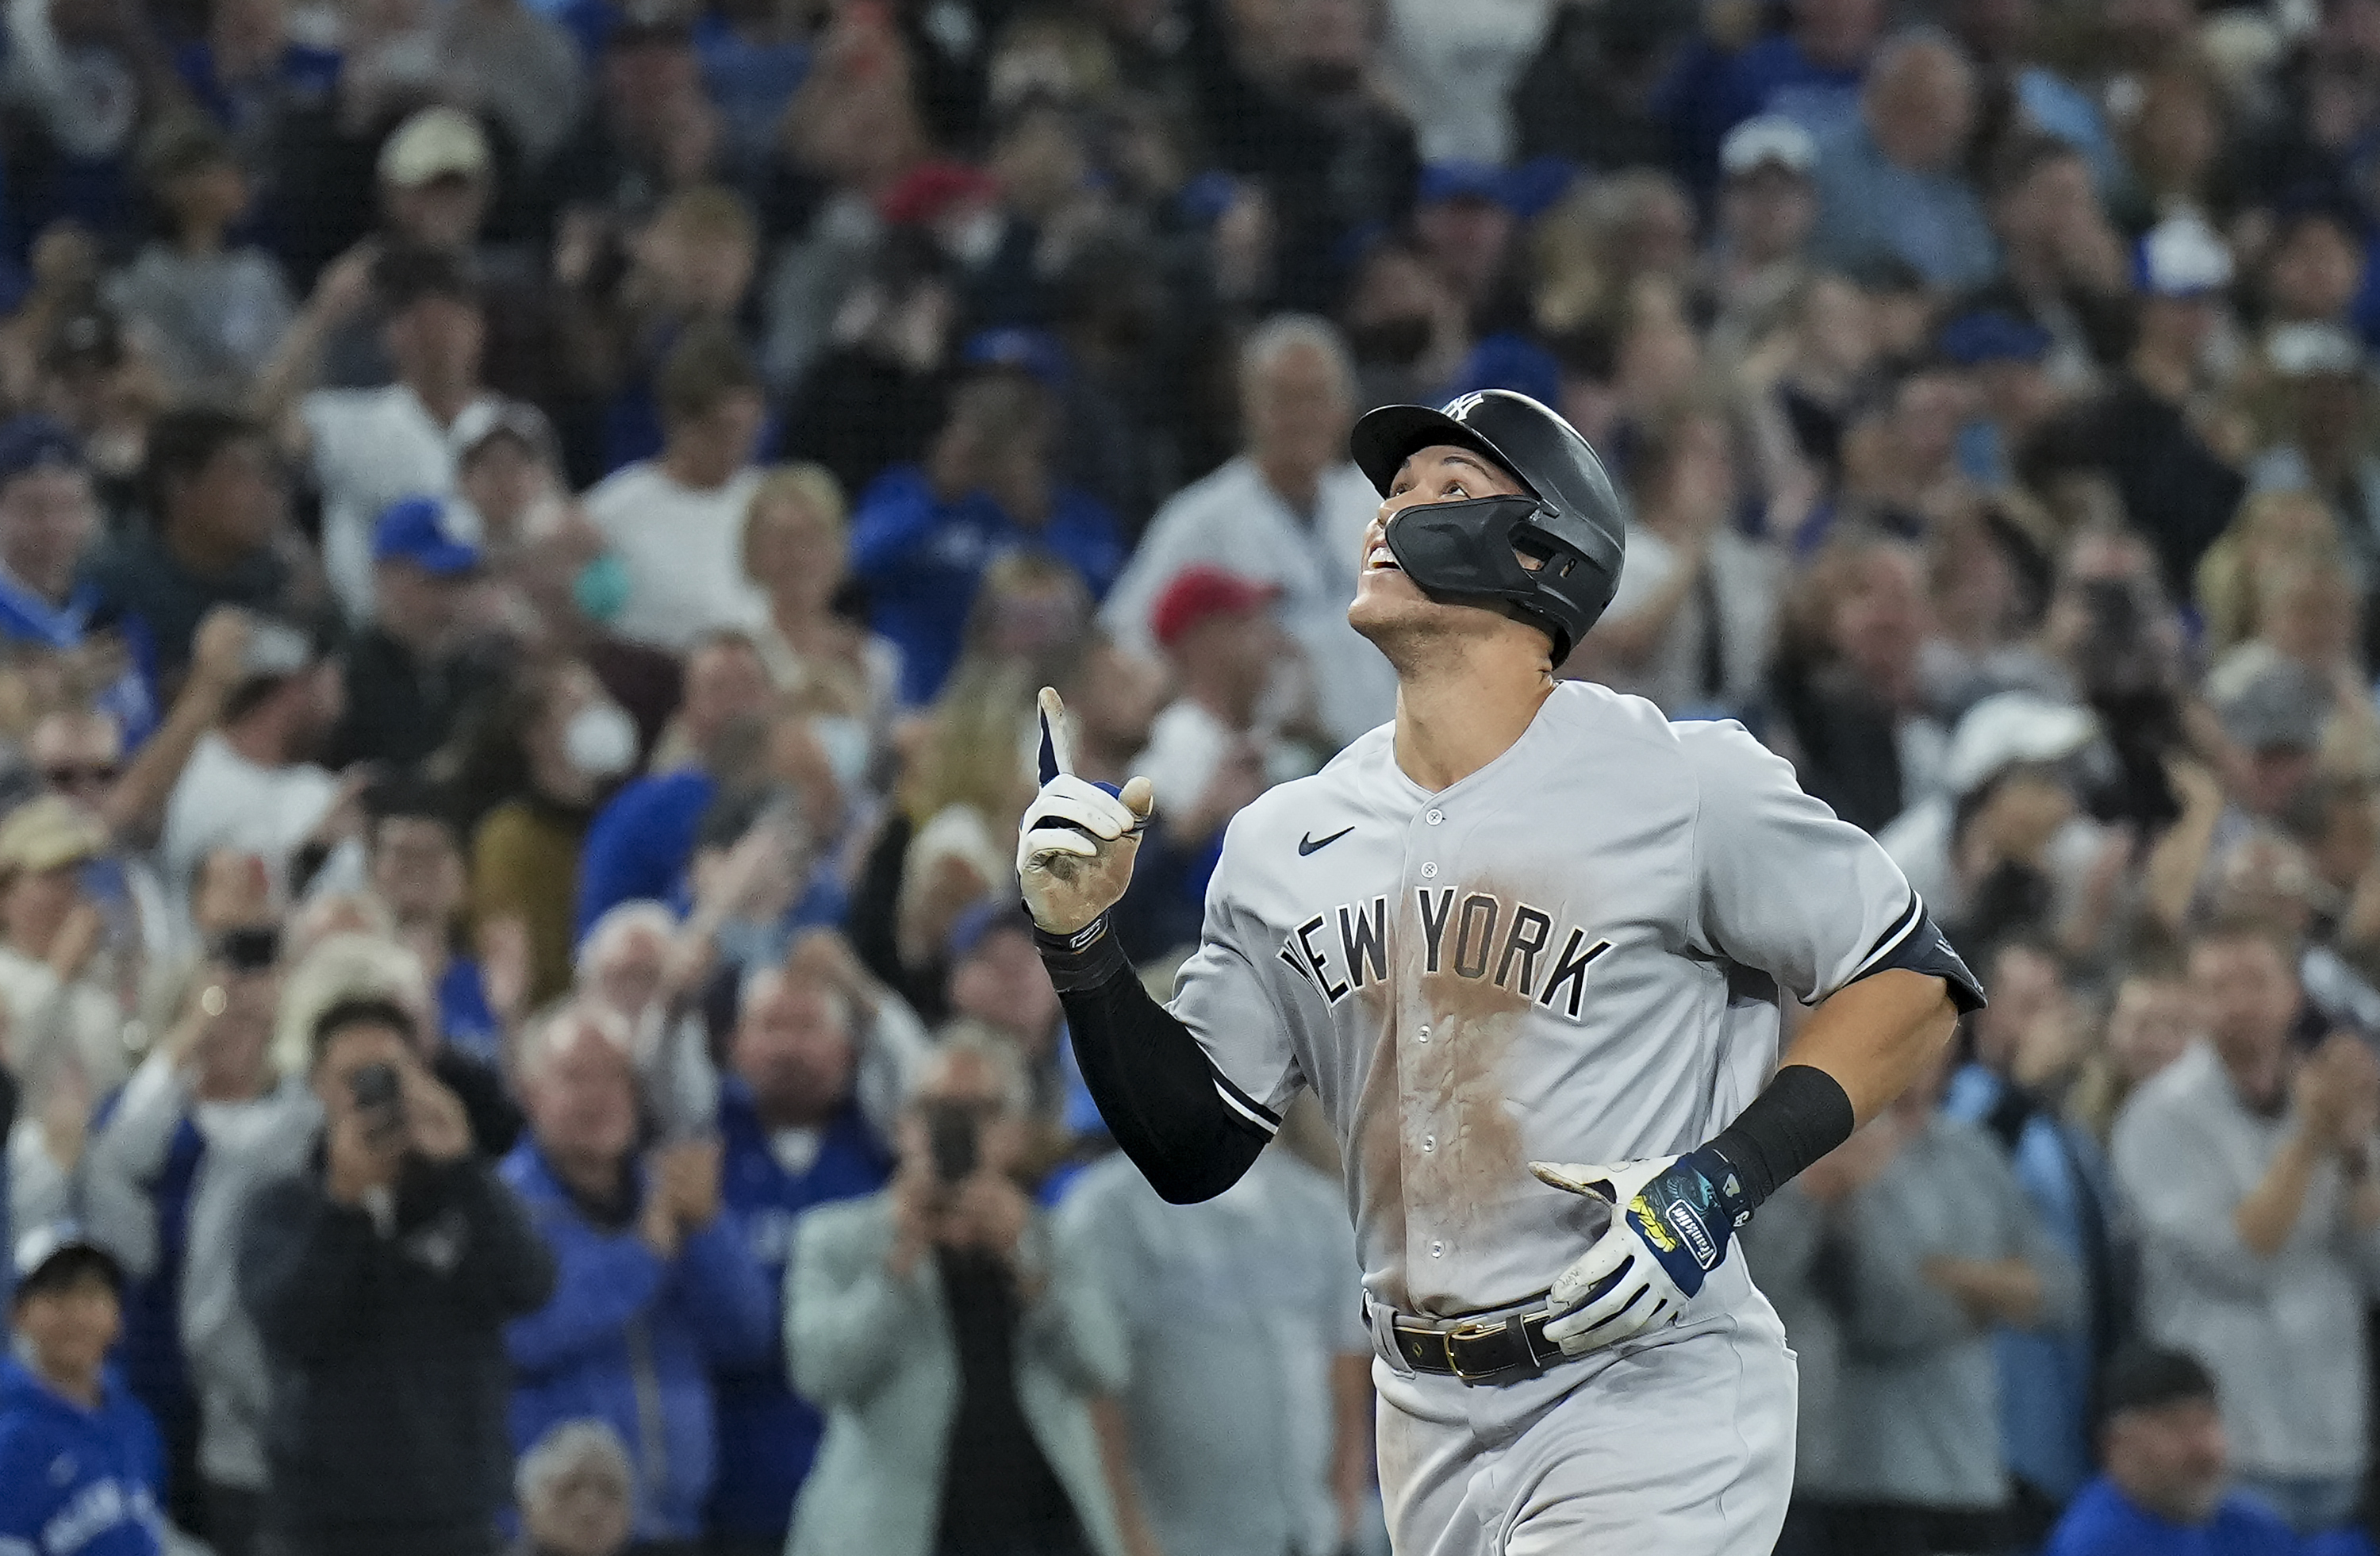 Yankees' Judge hits 61st home run, ties Maris' American League